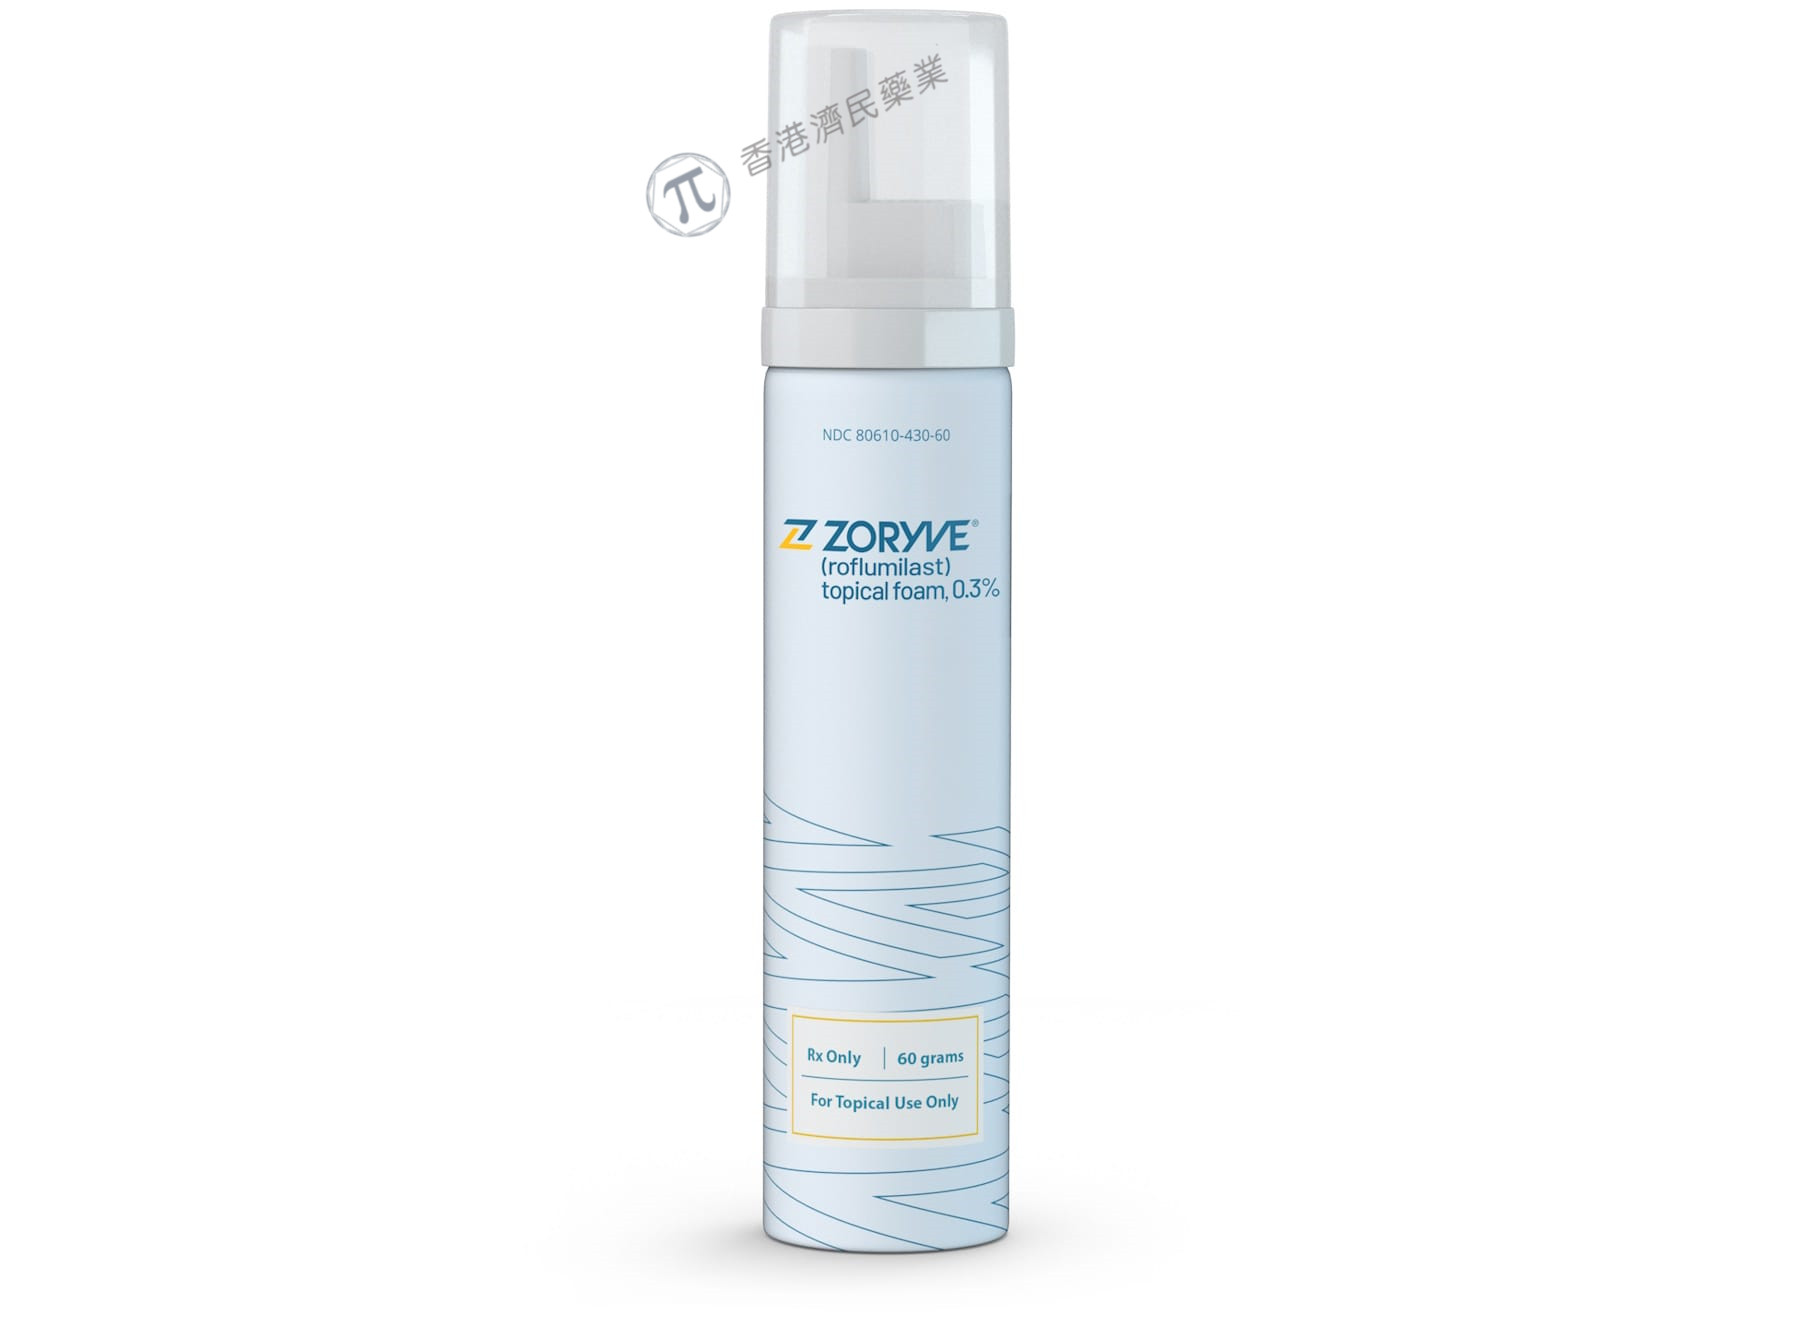 Zoryve外用泡沫0.3%现已在美国上市，用于脂溢性皮炎